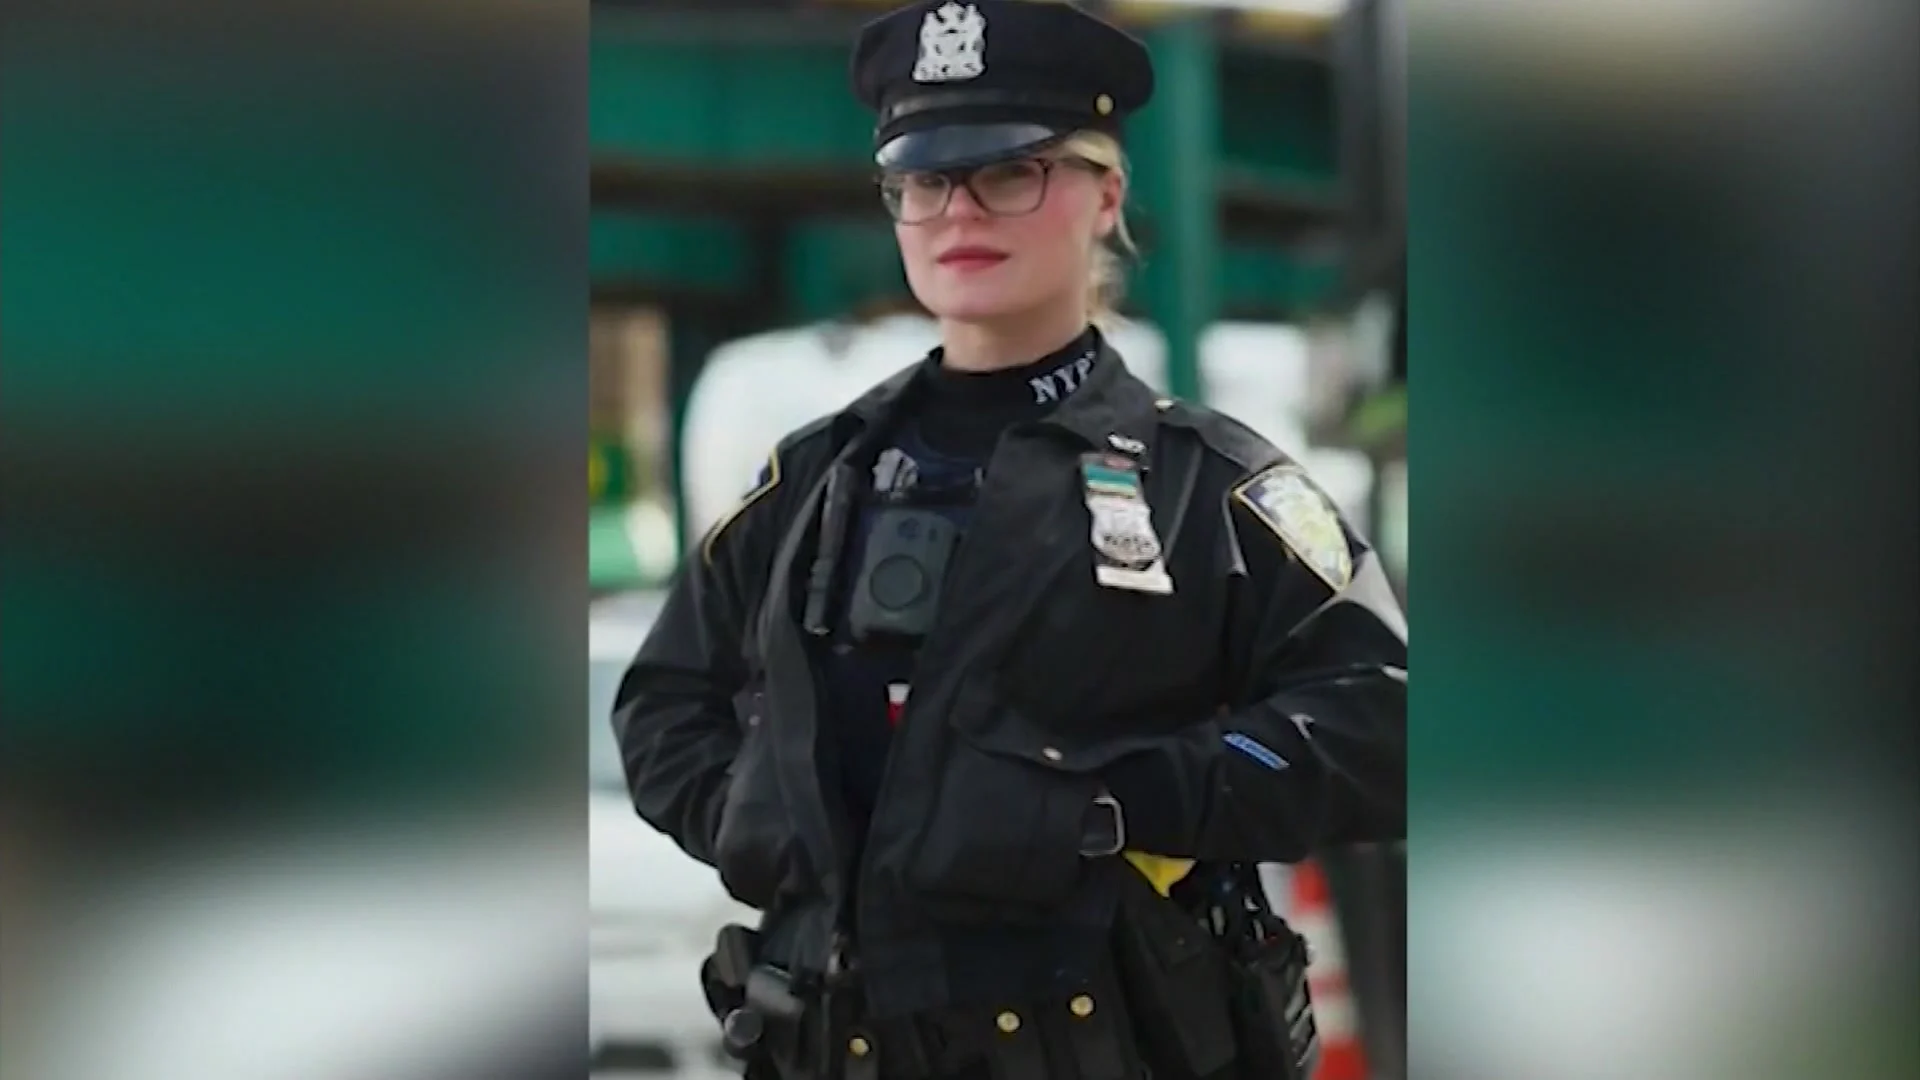 Hundreds attend wake for NYPD officer killed nail salon crash